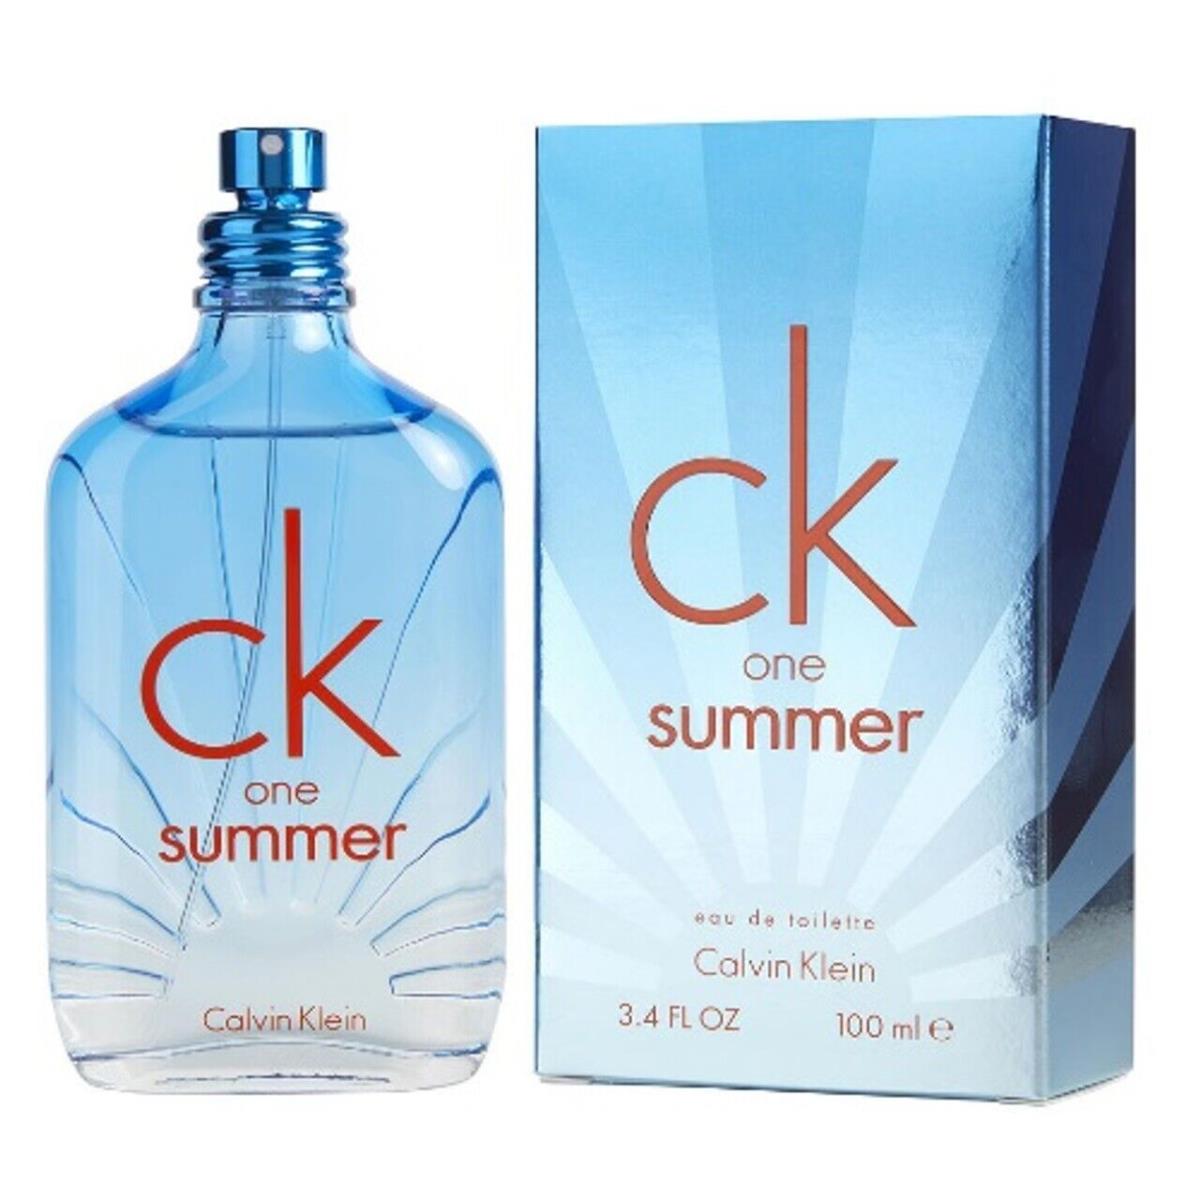 CK One Summer 2017 by Calvin Klein 3.4 oz / 100 ml Eau De Toilette Spray Unisex